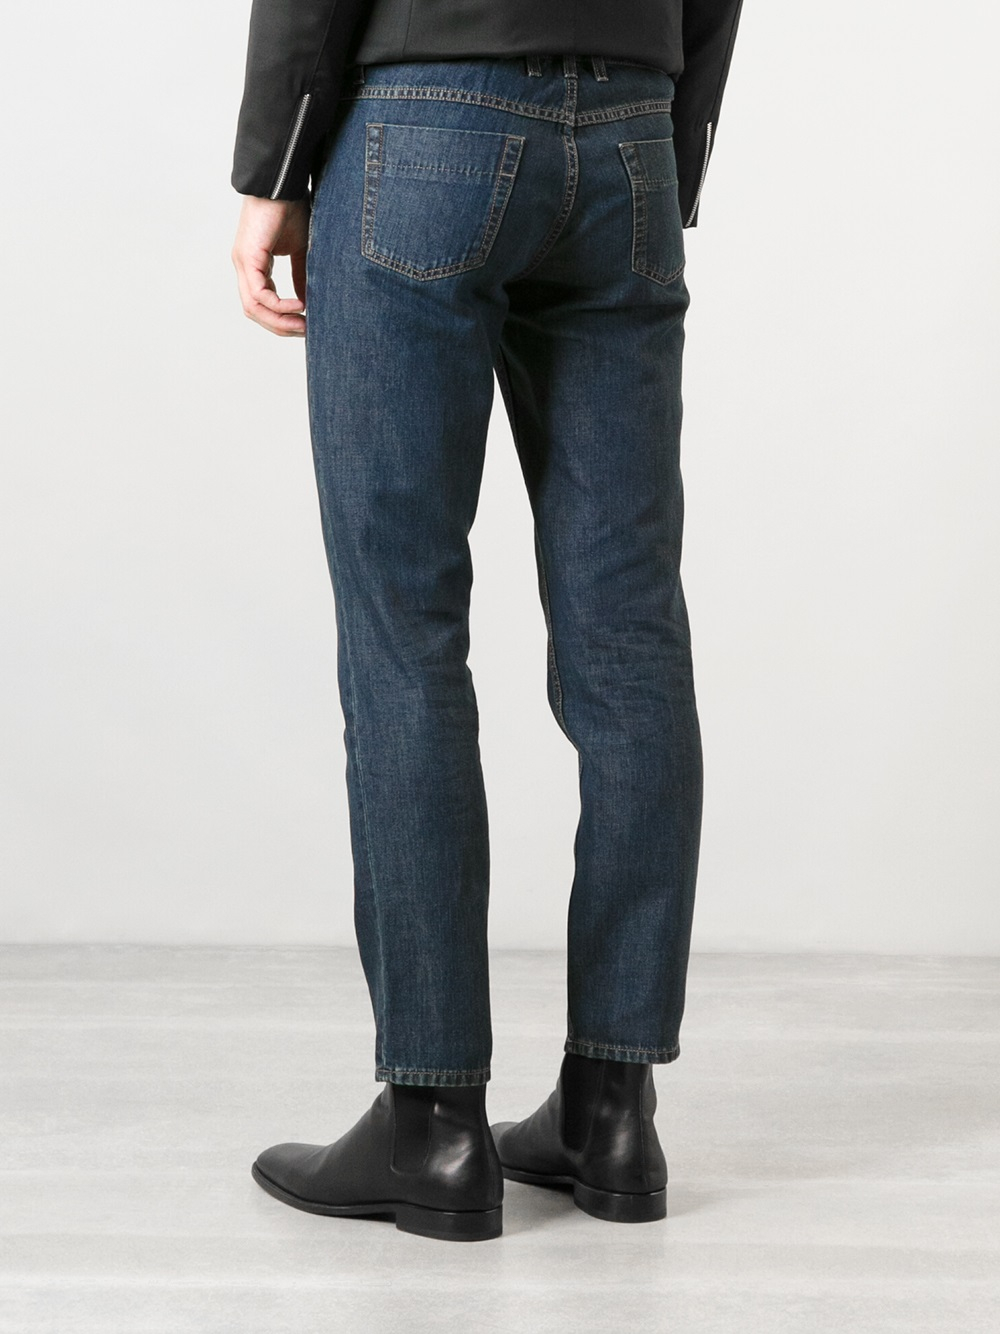 Gucci Denim Jeans in Blue for Men - Lyst